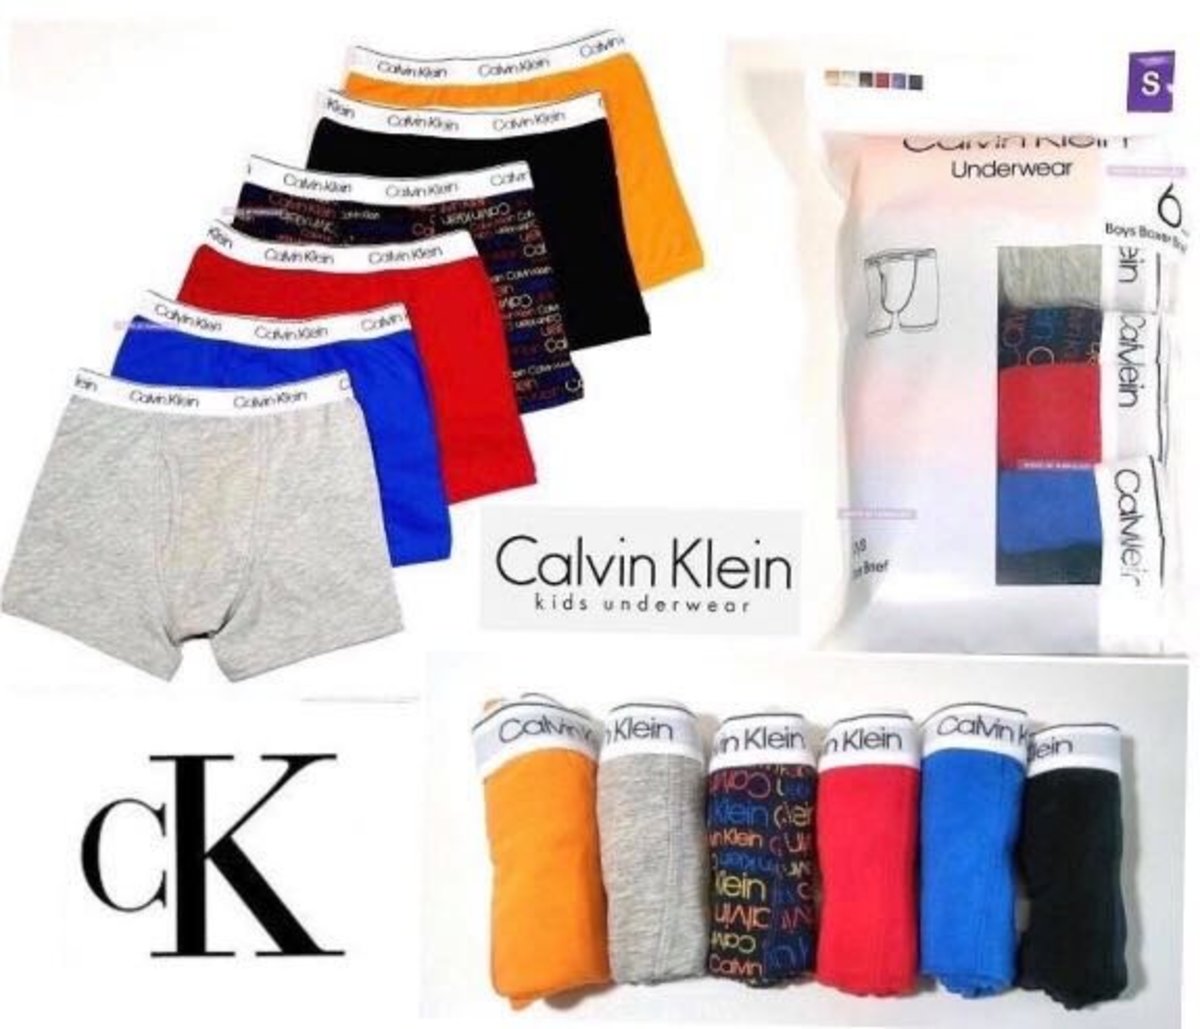 calvin klein boxers 6 pack